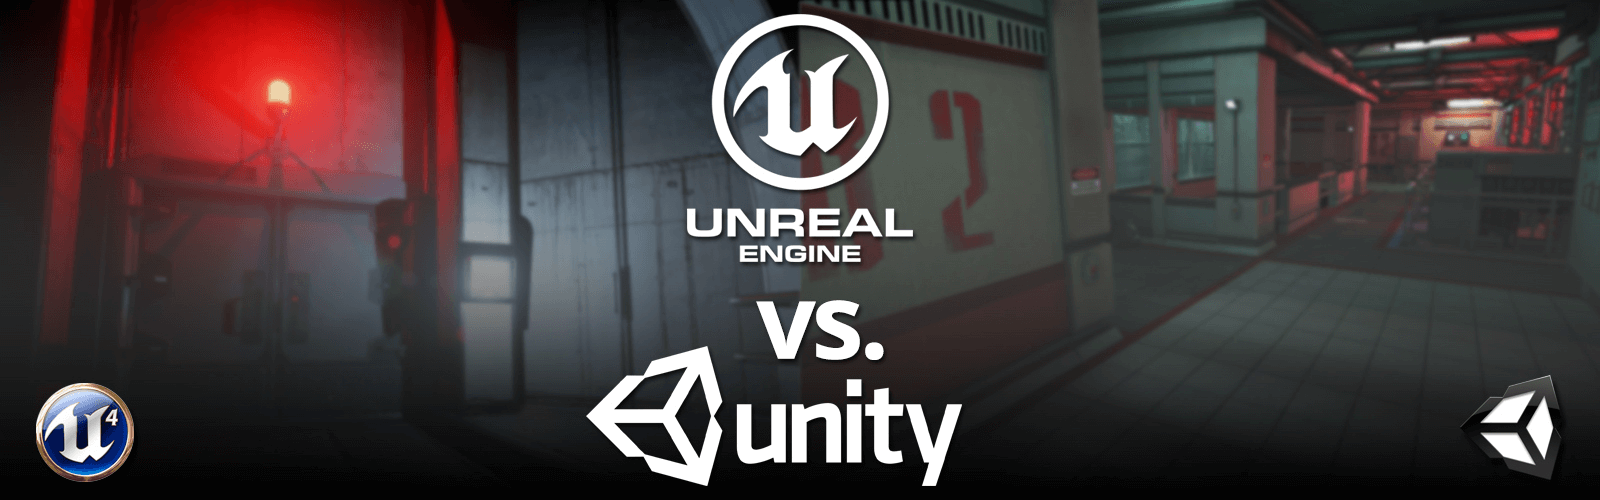 Unity3d vs Unreal Engine 4